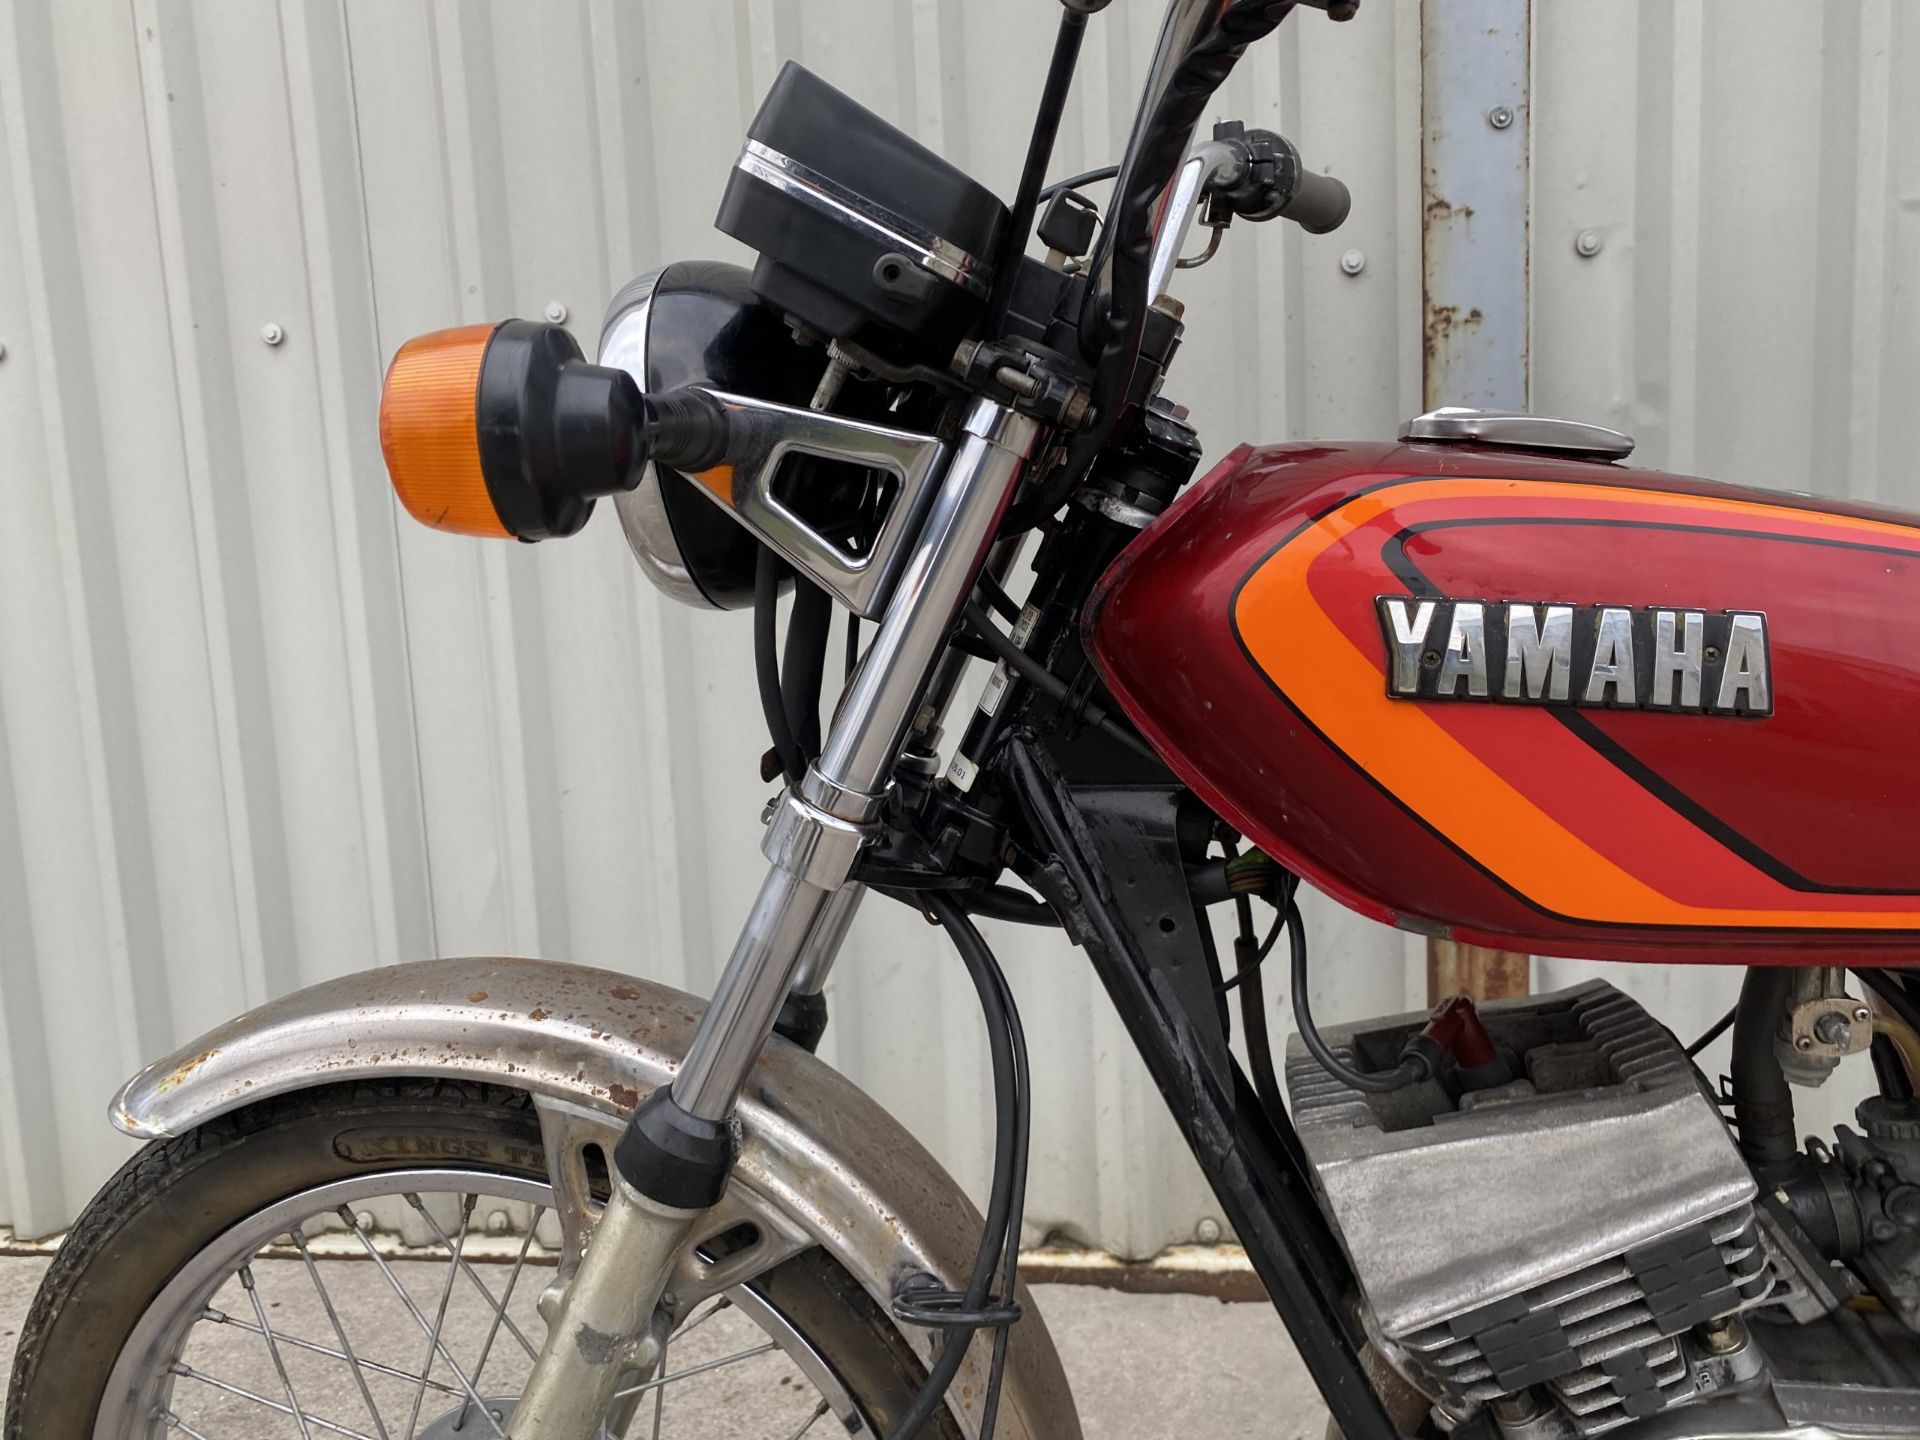 Yamaha RXS100 Motorcycle - Image 9 of 18